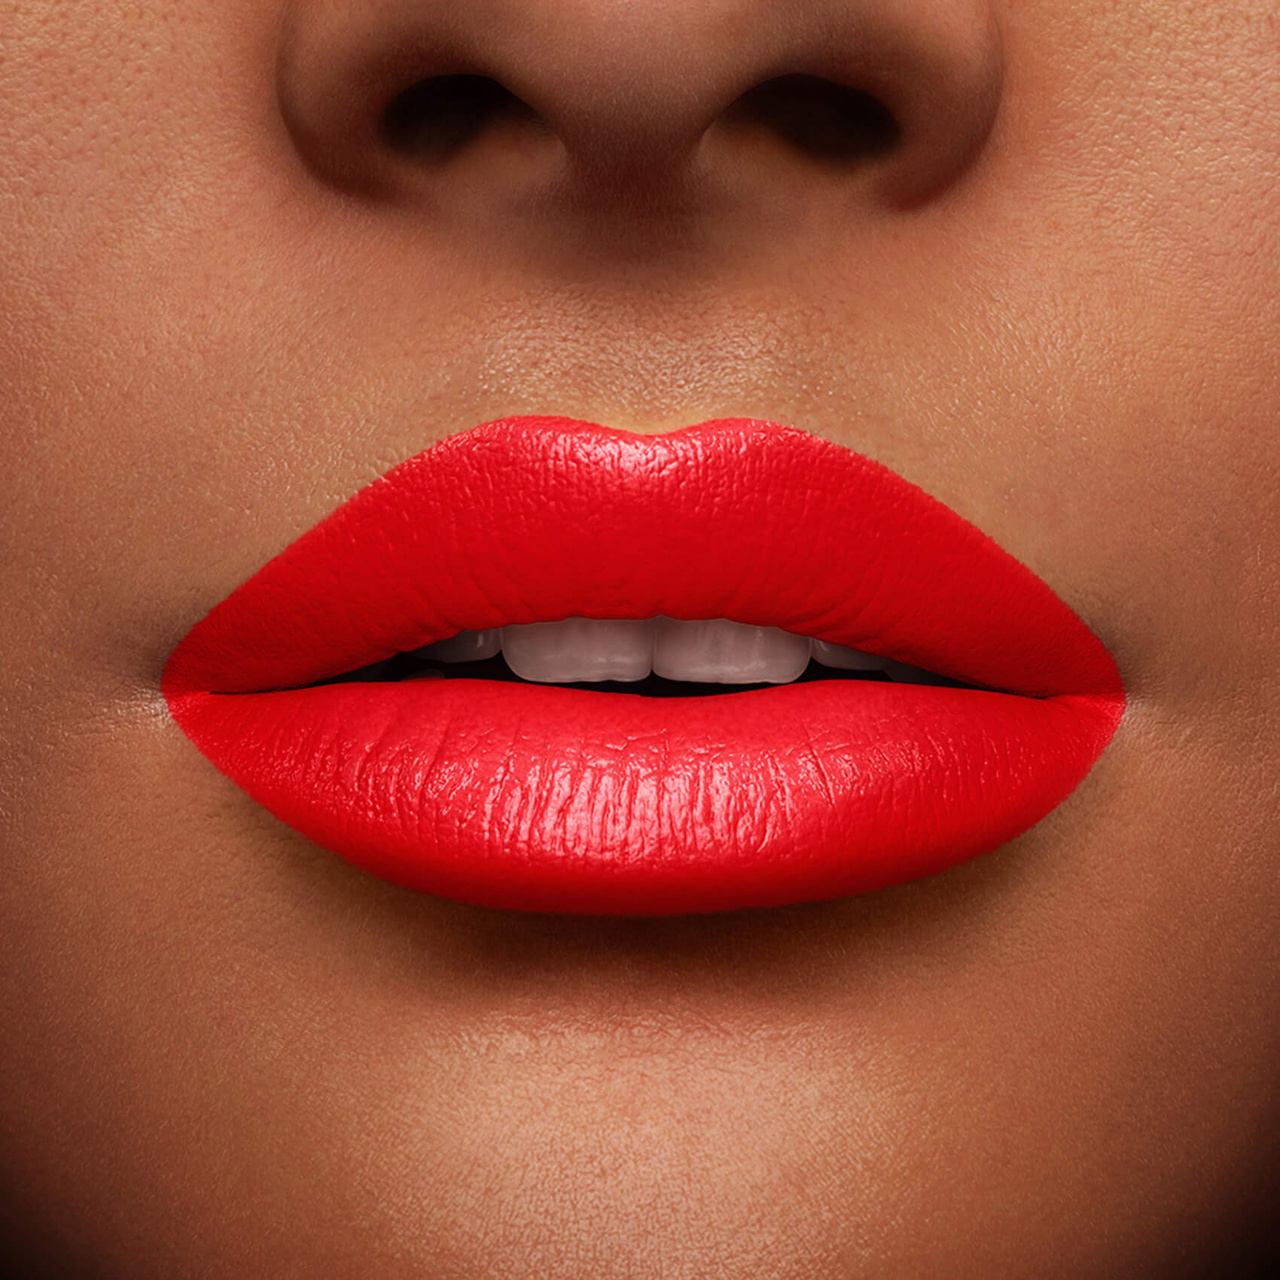 Lancome L Absolu Rouge Cream Lipstick 171